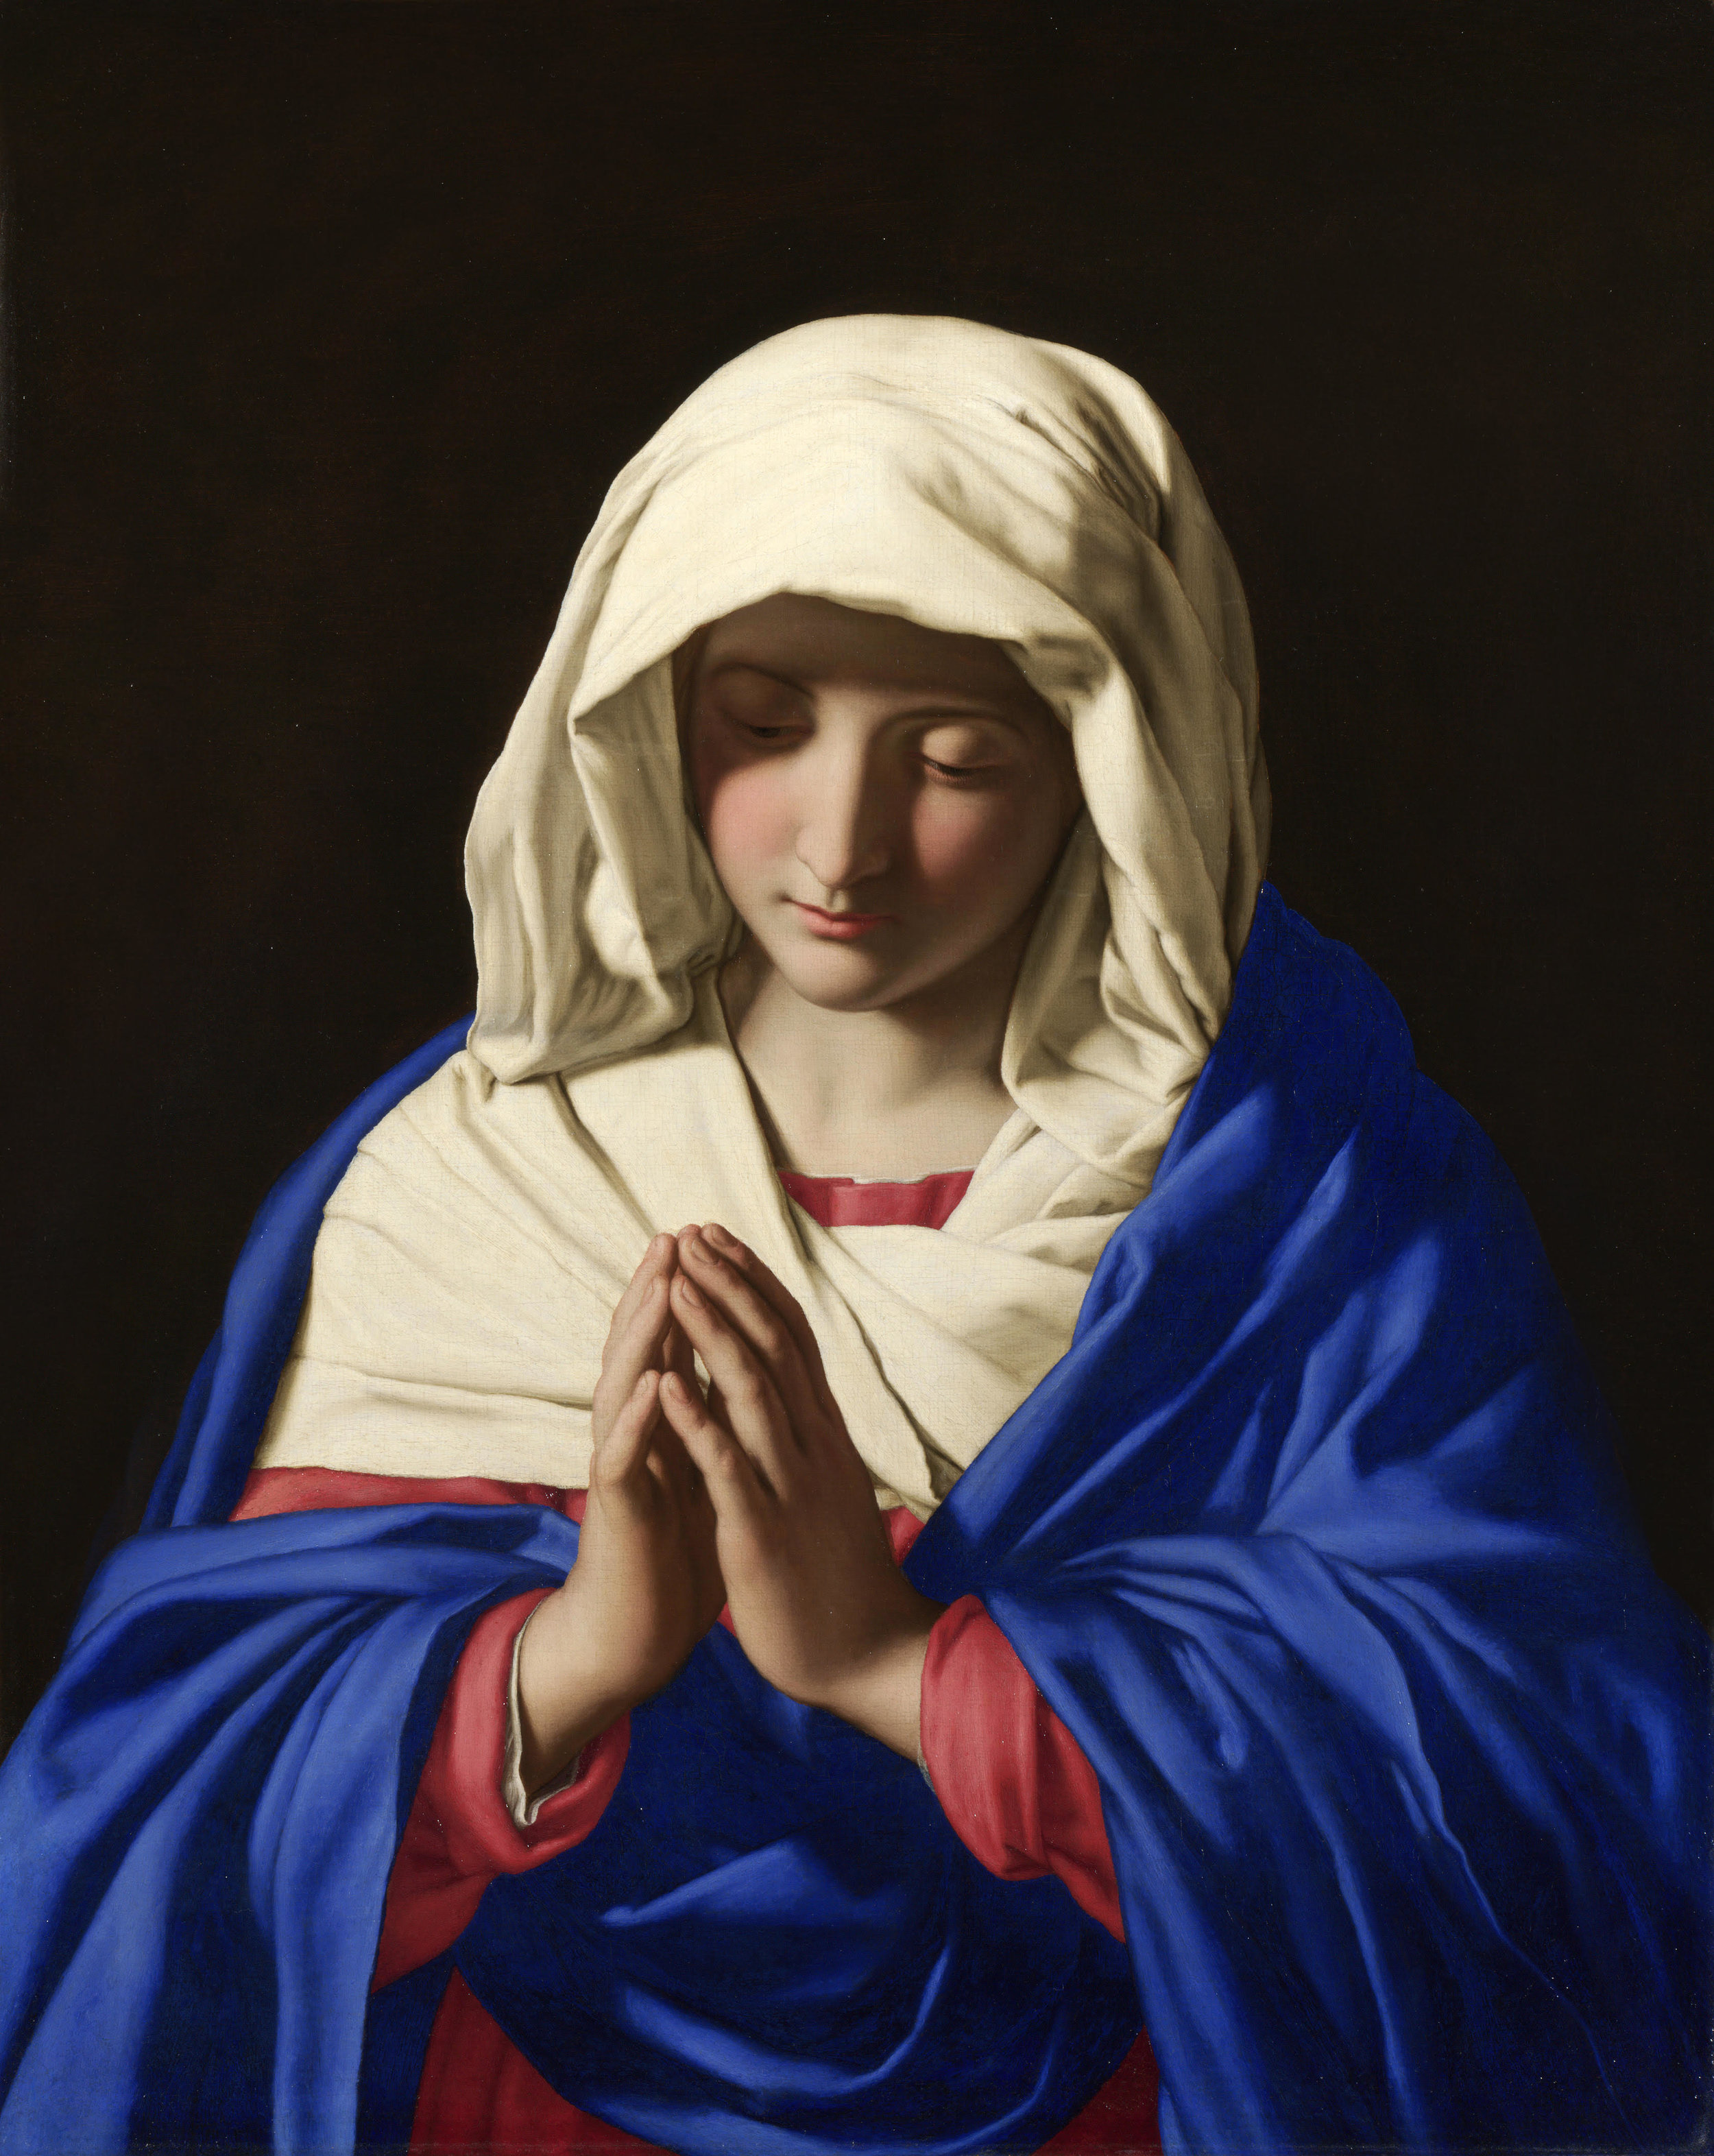 Sassoferrato - The virgin in prayer (1640-1650)